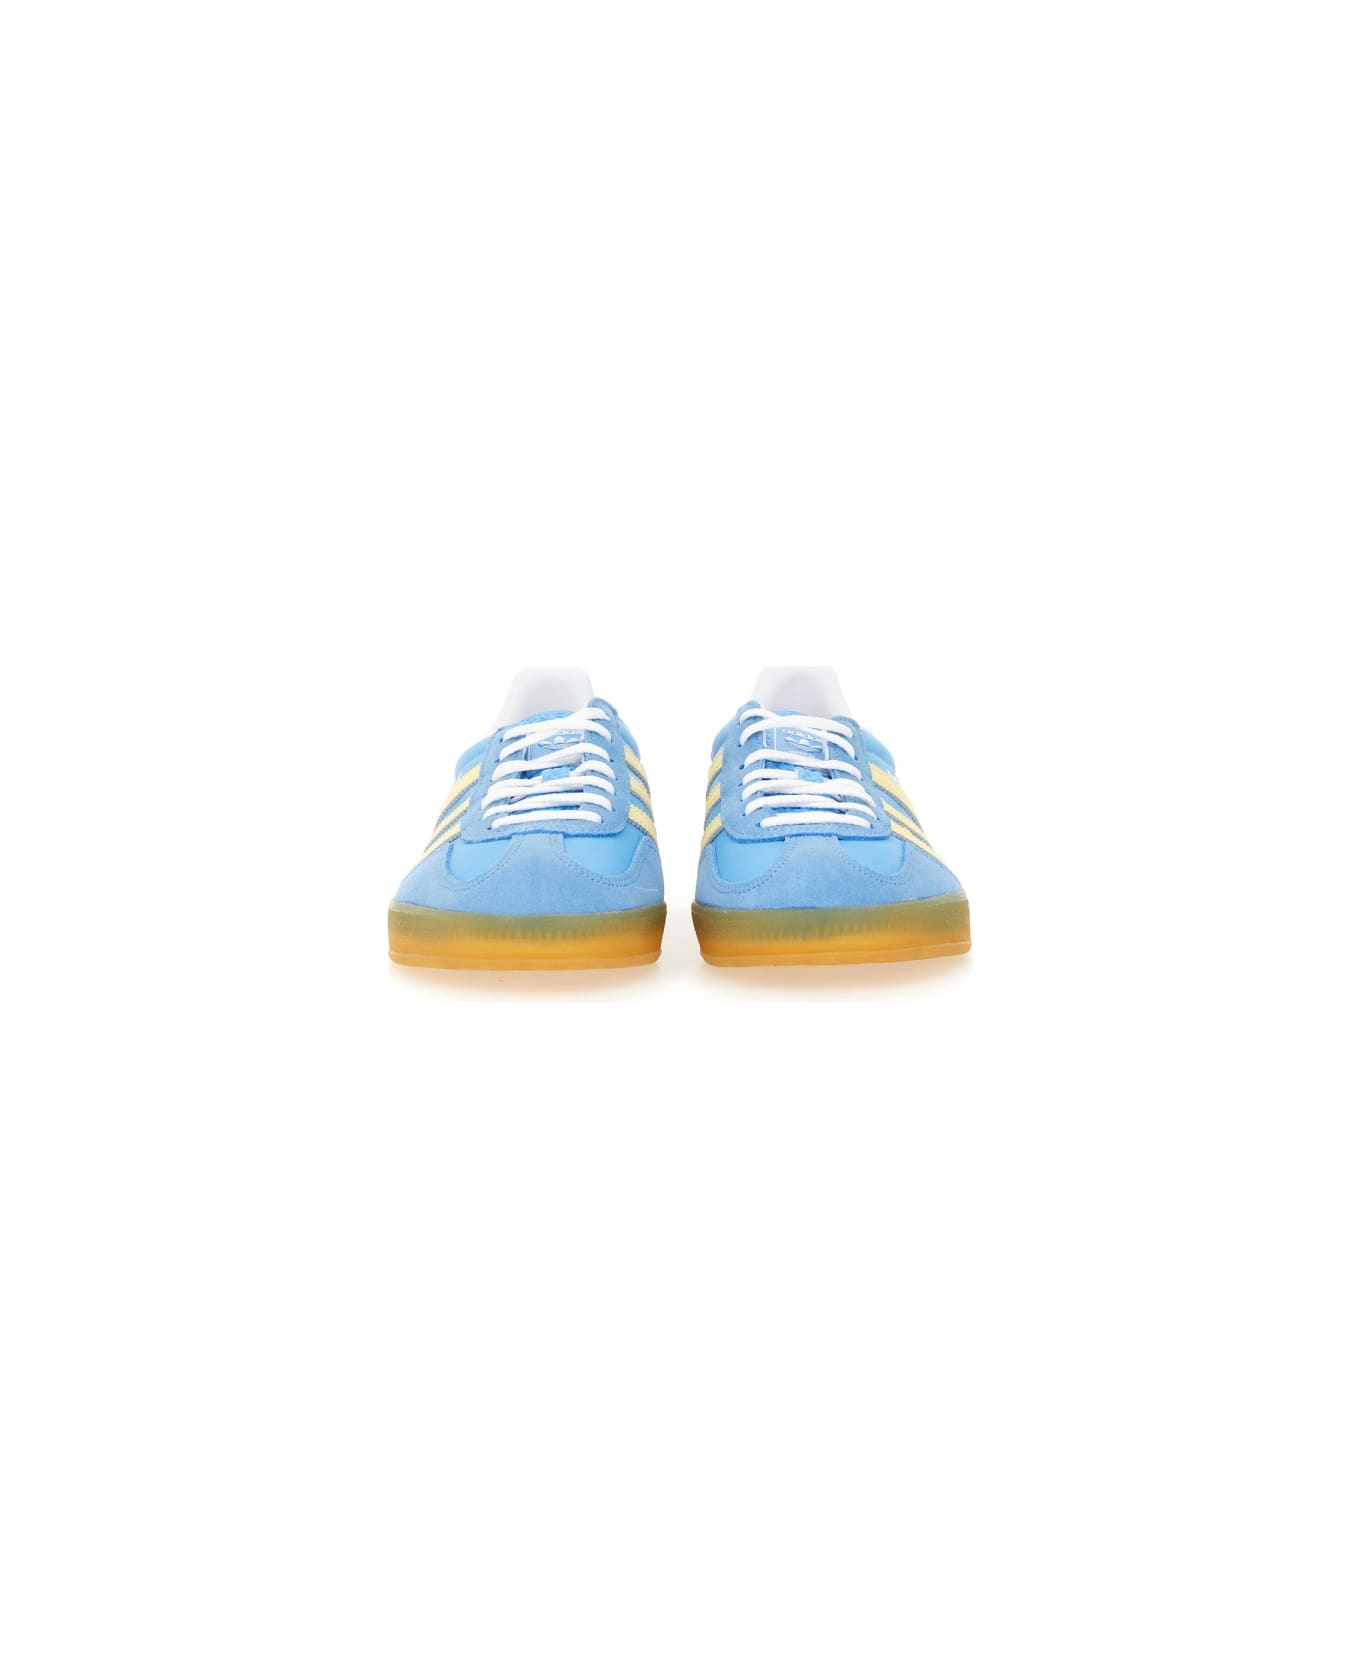 Adidas Originals "gazelle" Sneaker - BABY BLUE